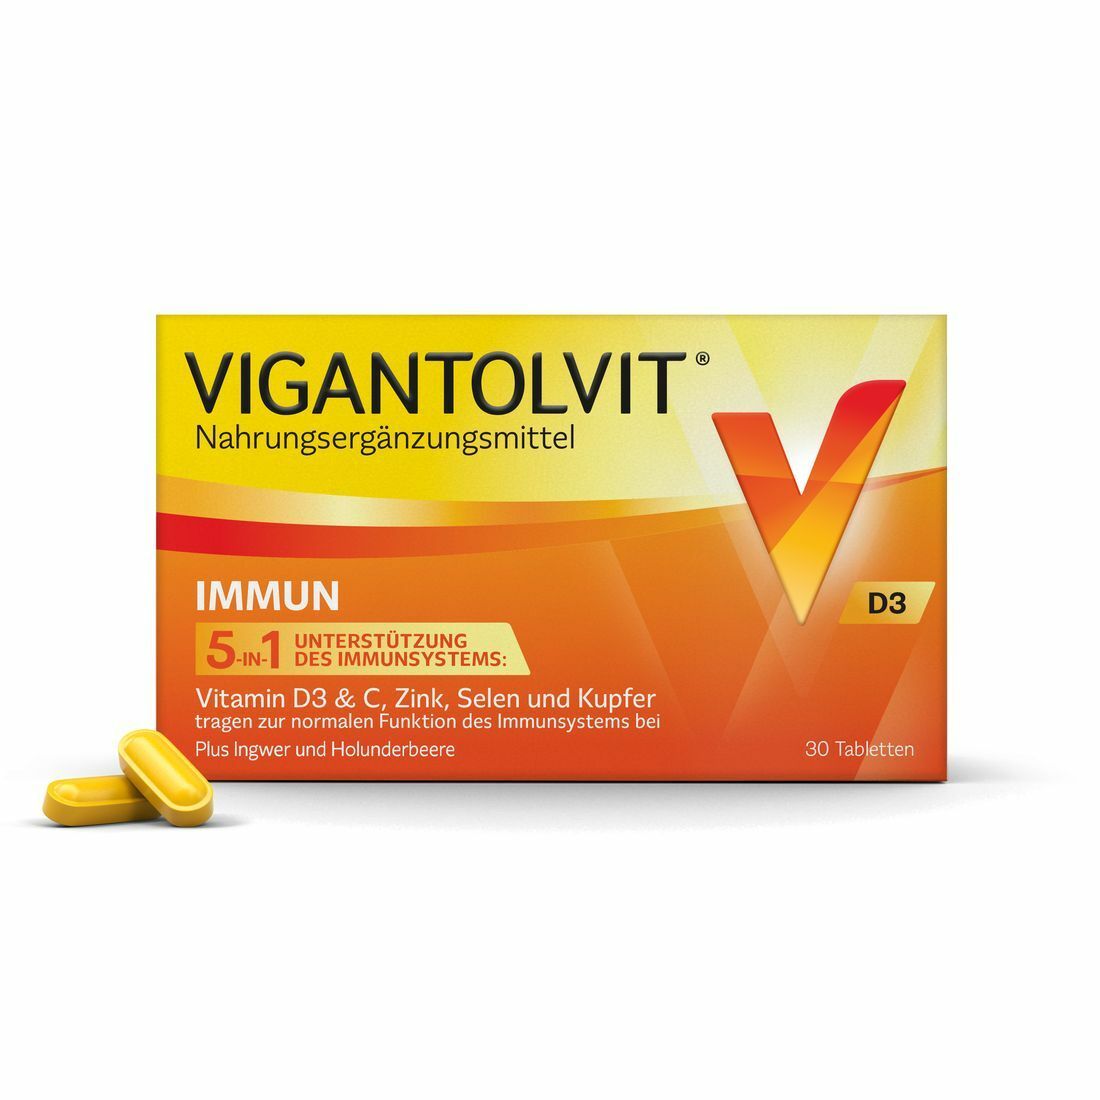 Vigantolvit Immun Filmtabletten – 30 Stück